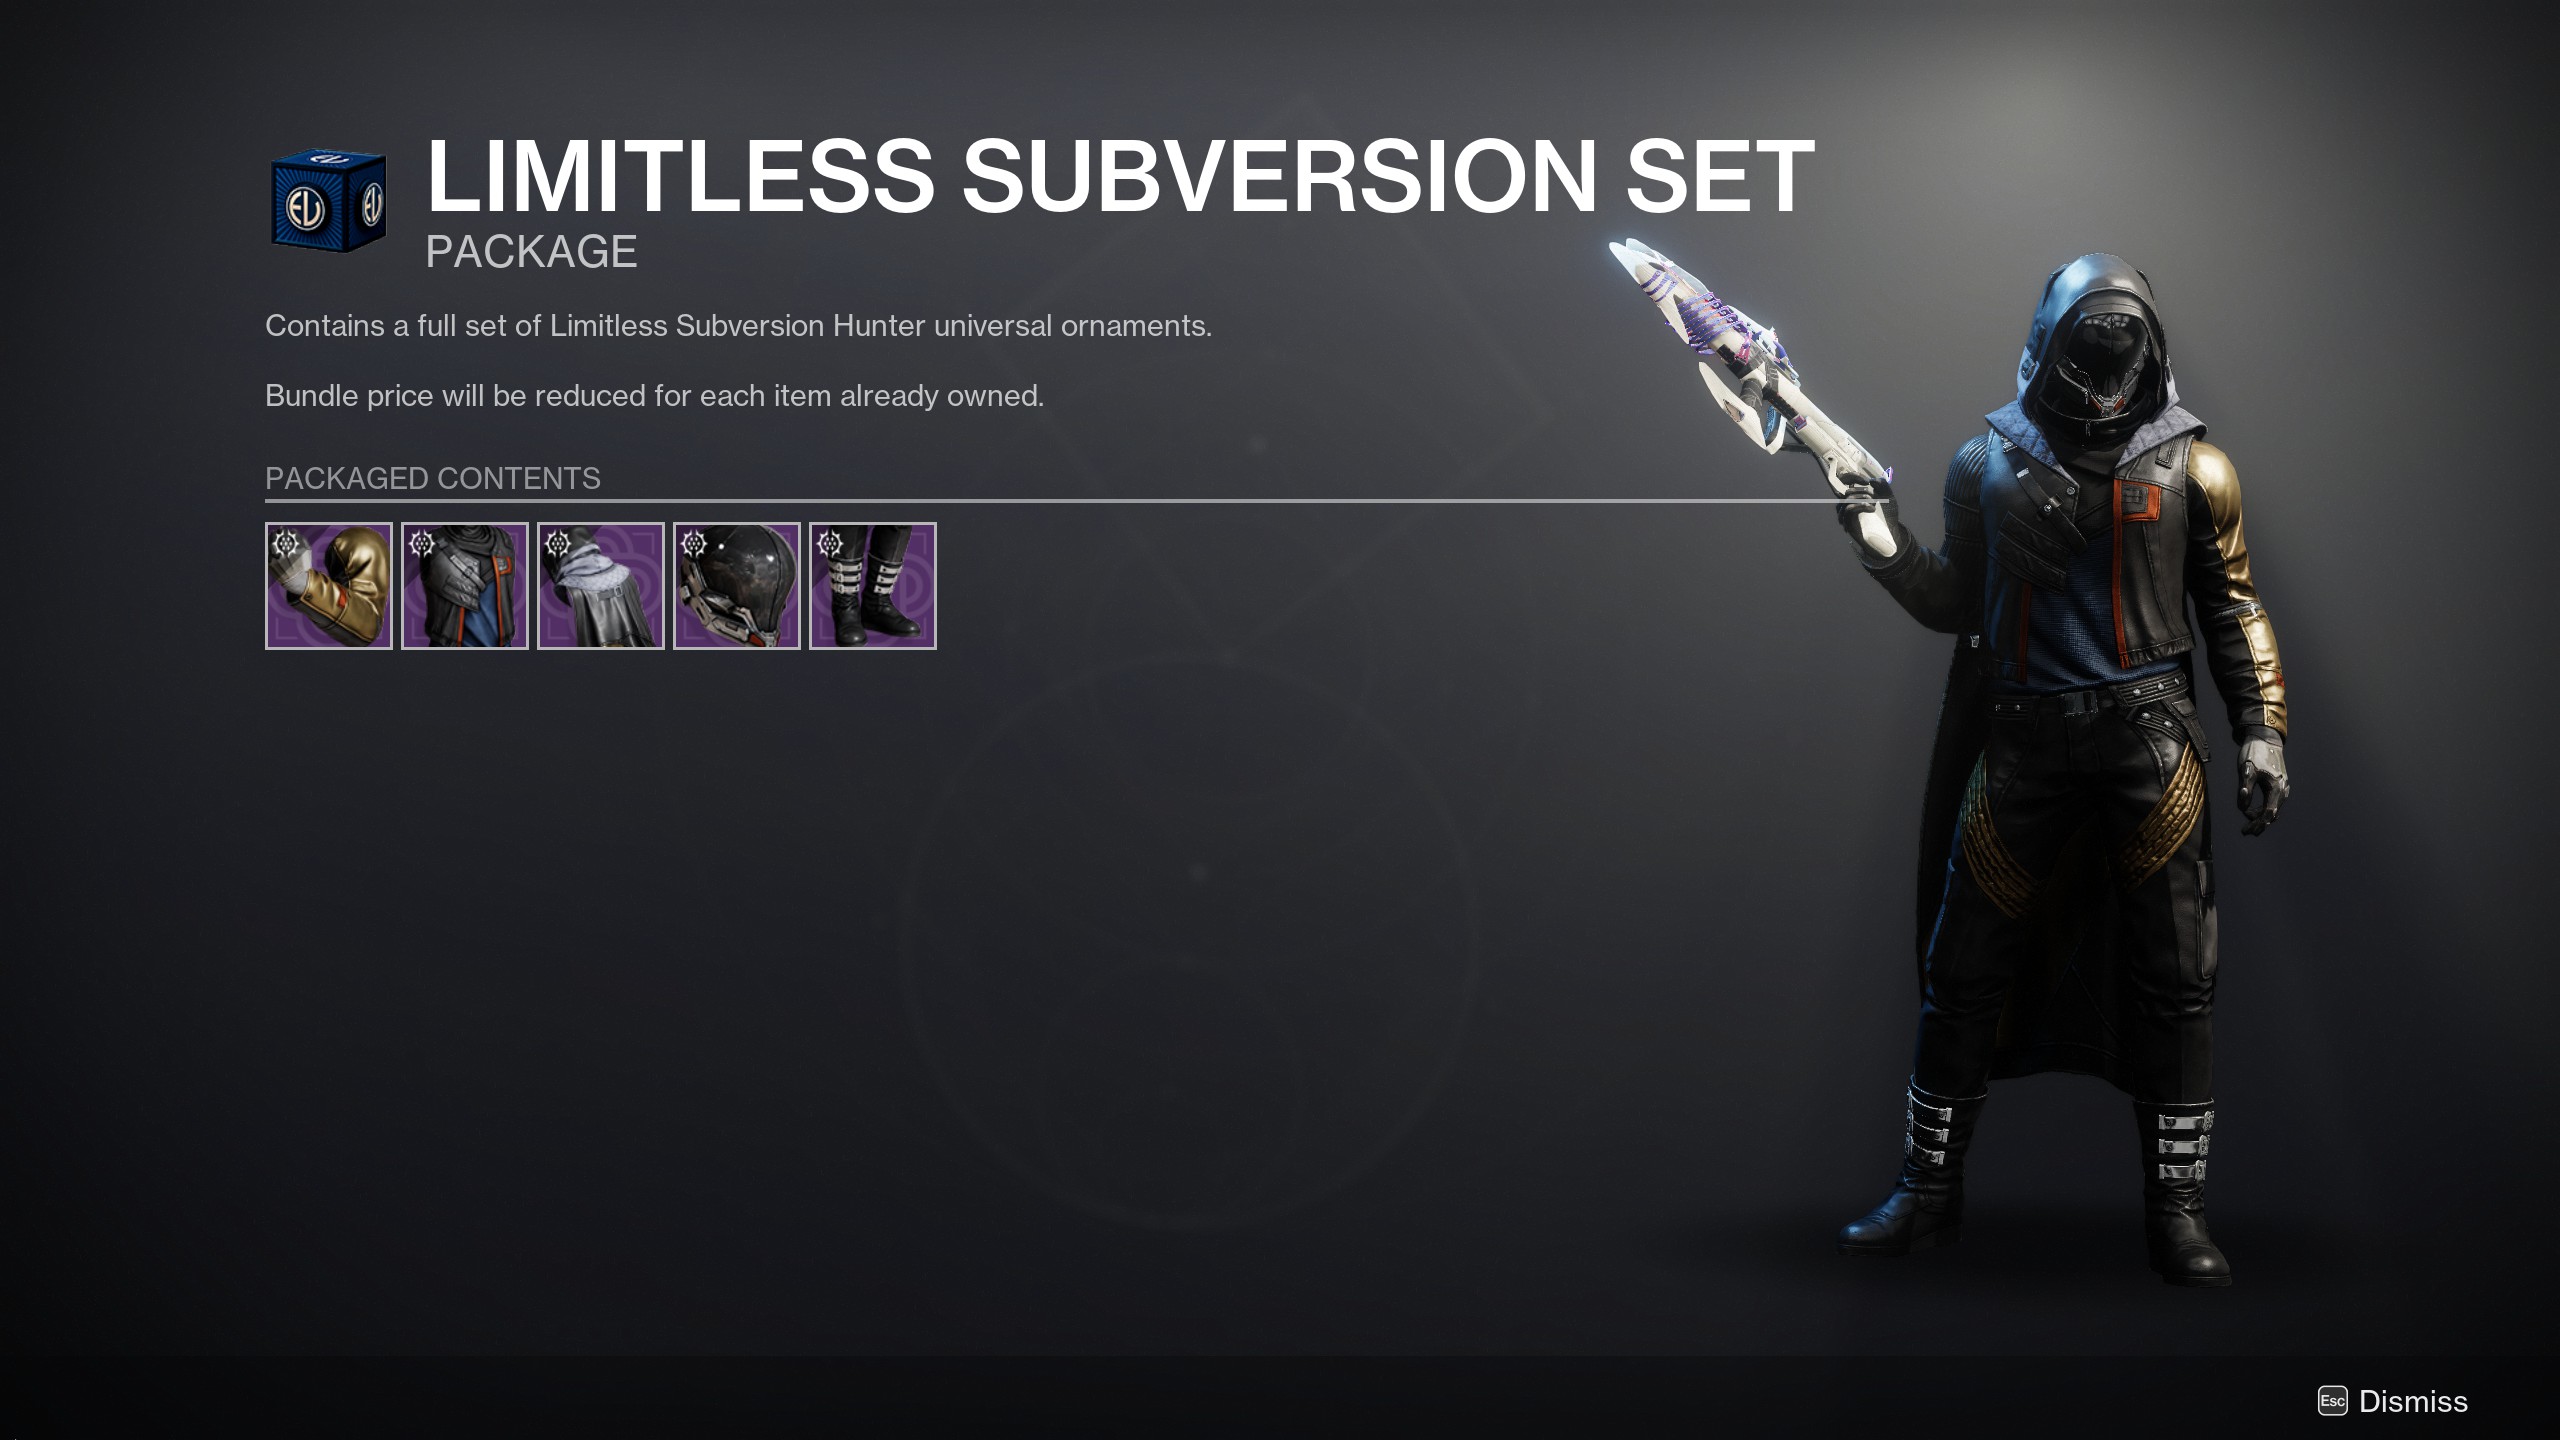 Destiny 2 Limitless Subversion set